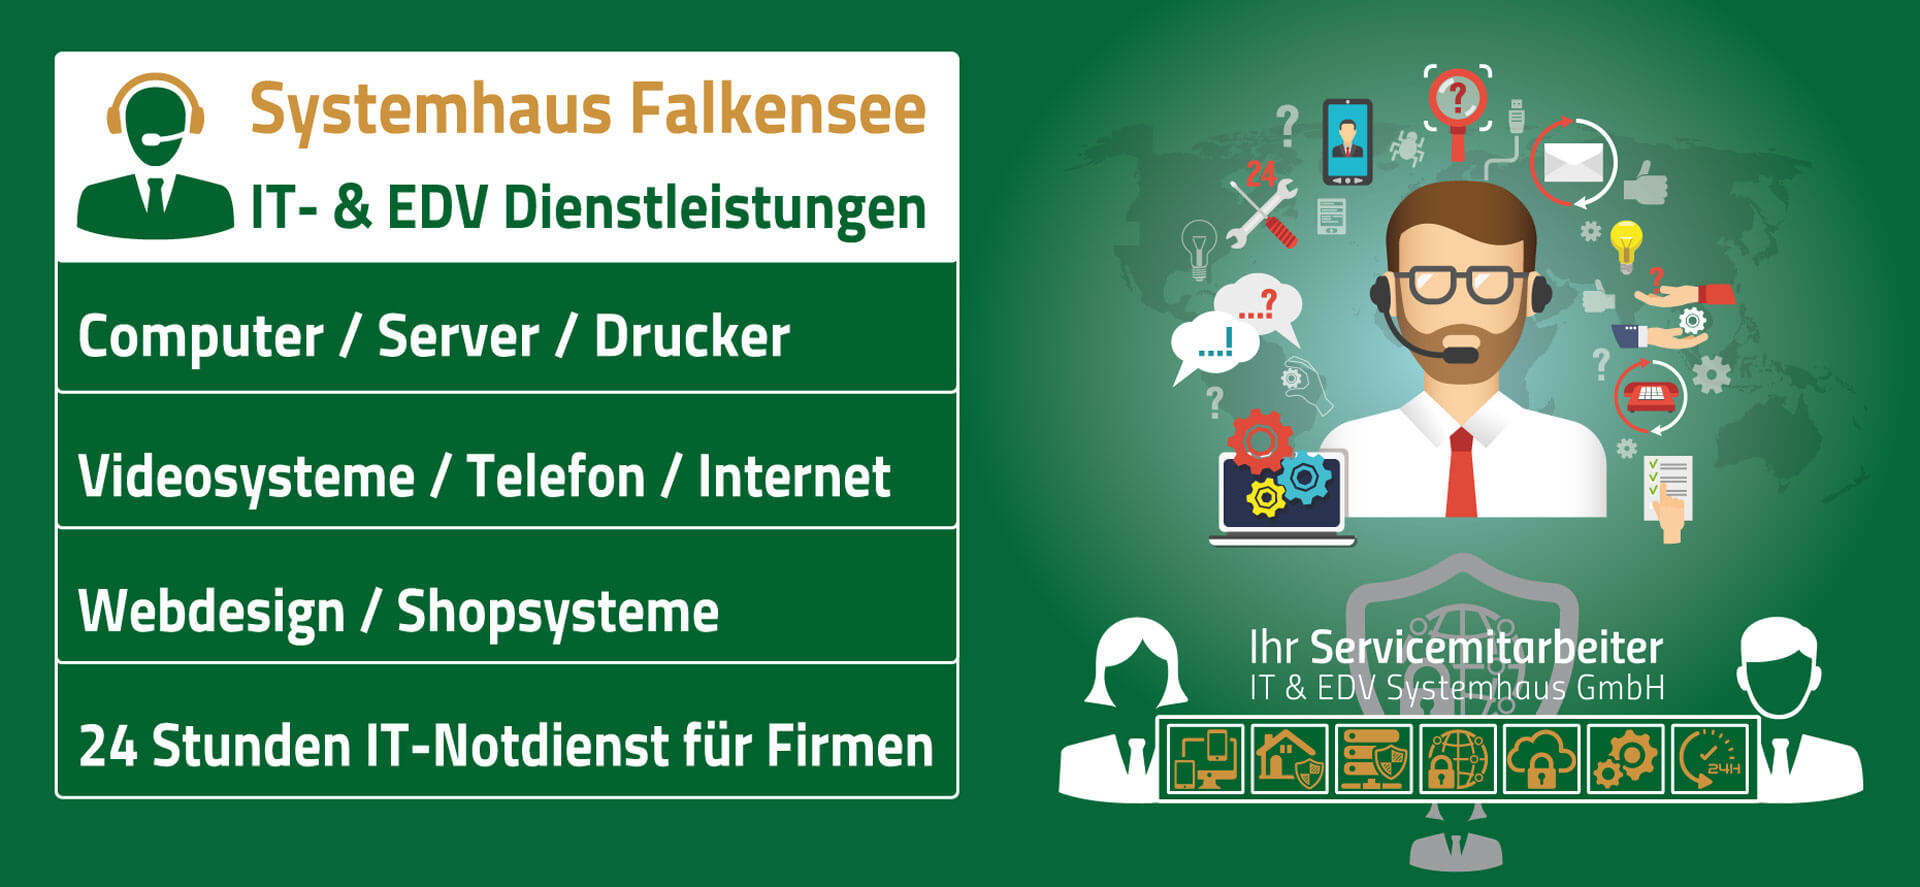 IT Firma Falkensee - Servicemitarbeiter - IT & EDV Systemhaus